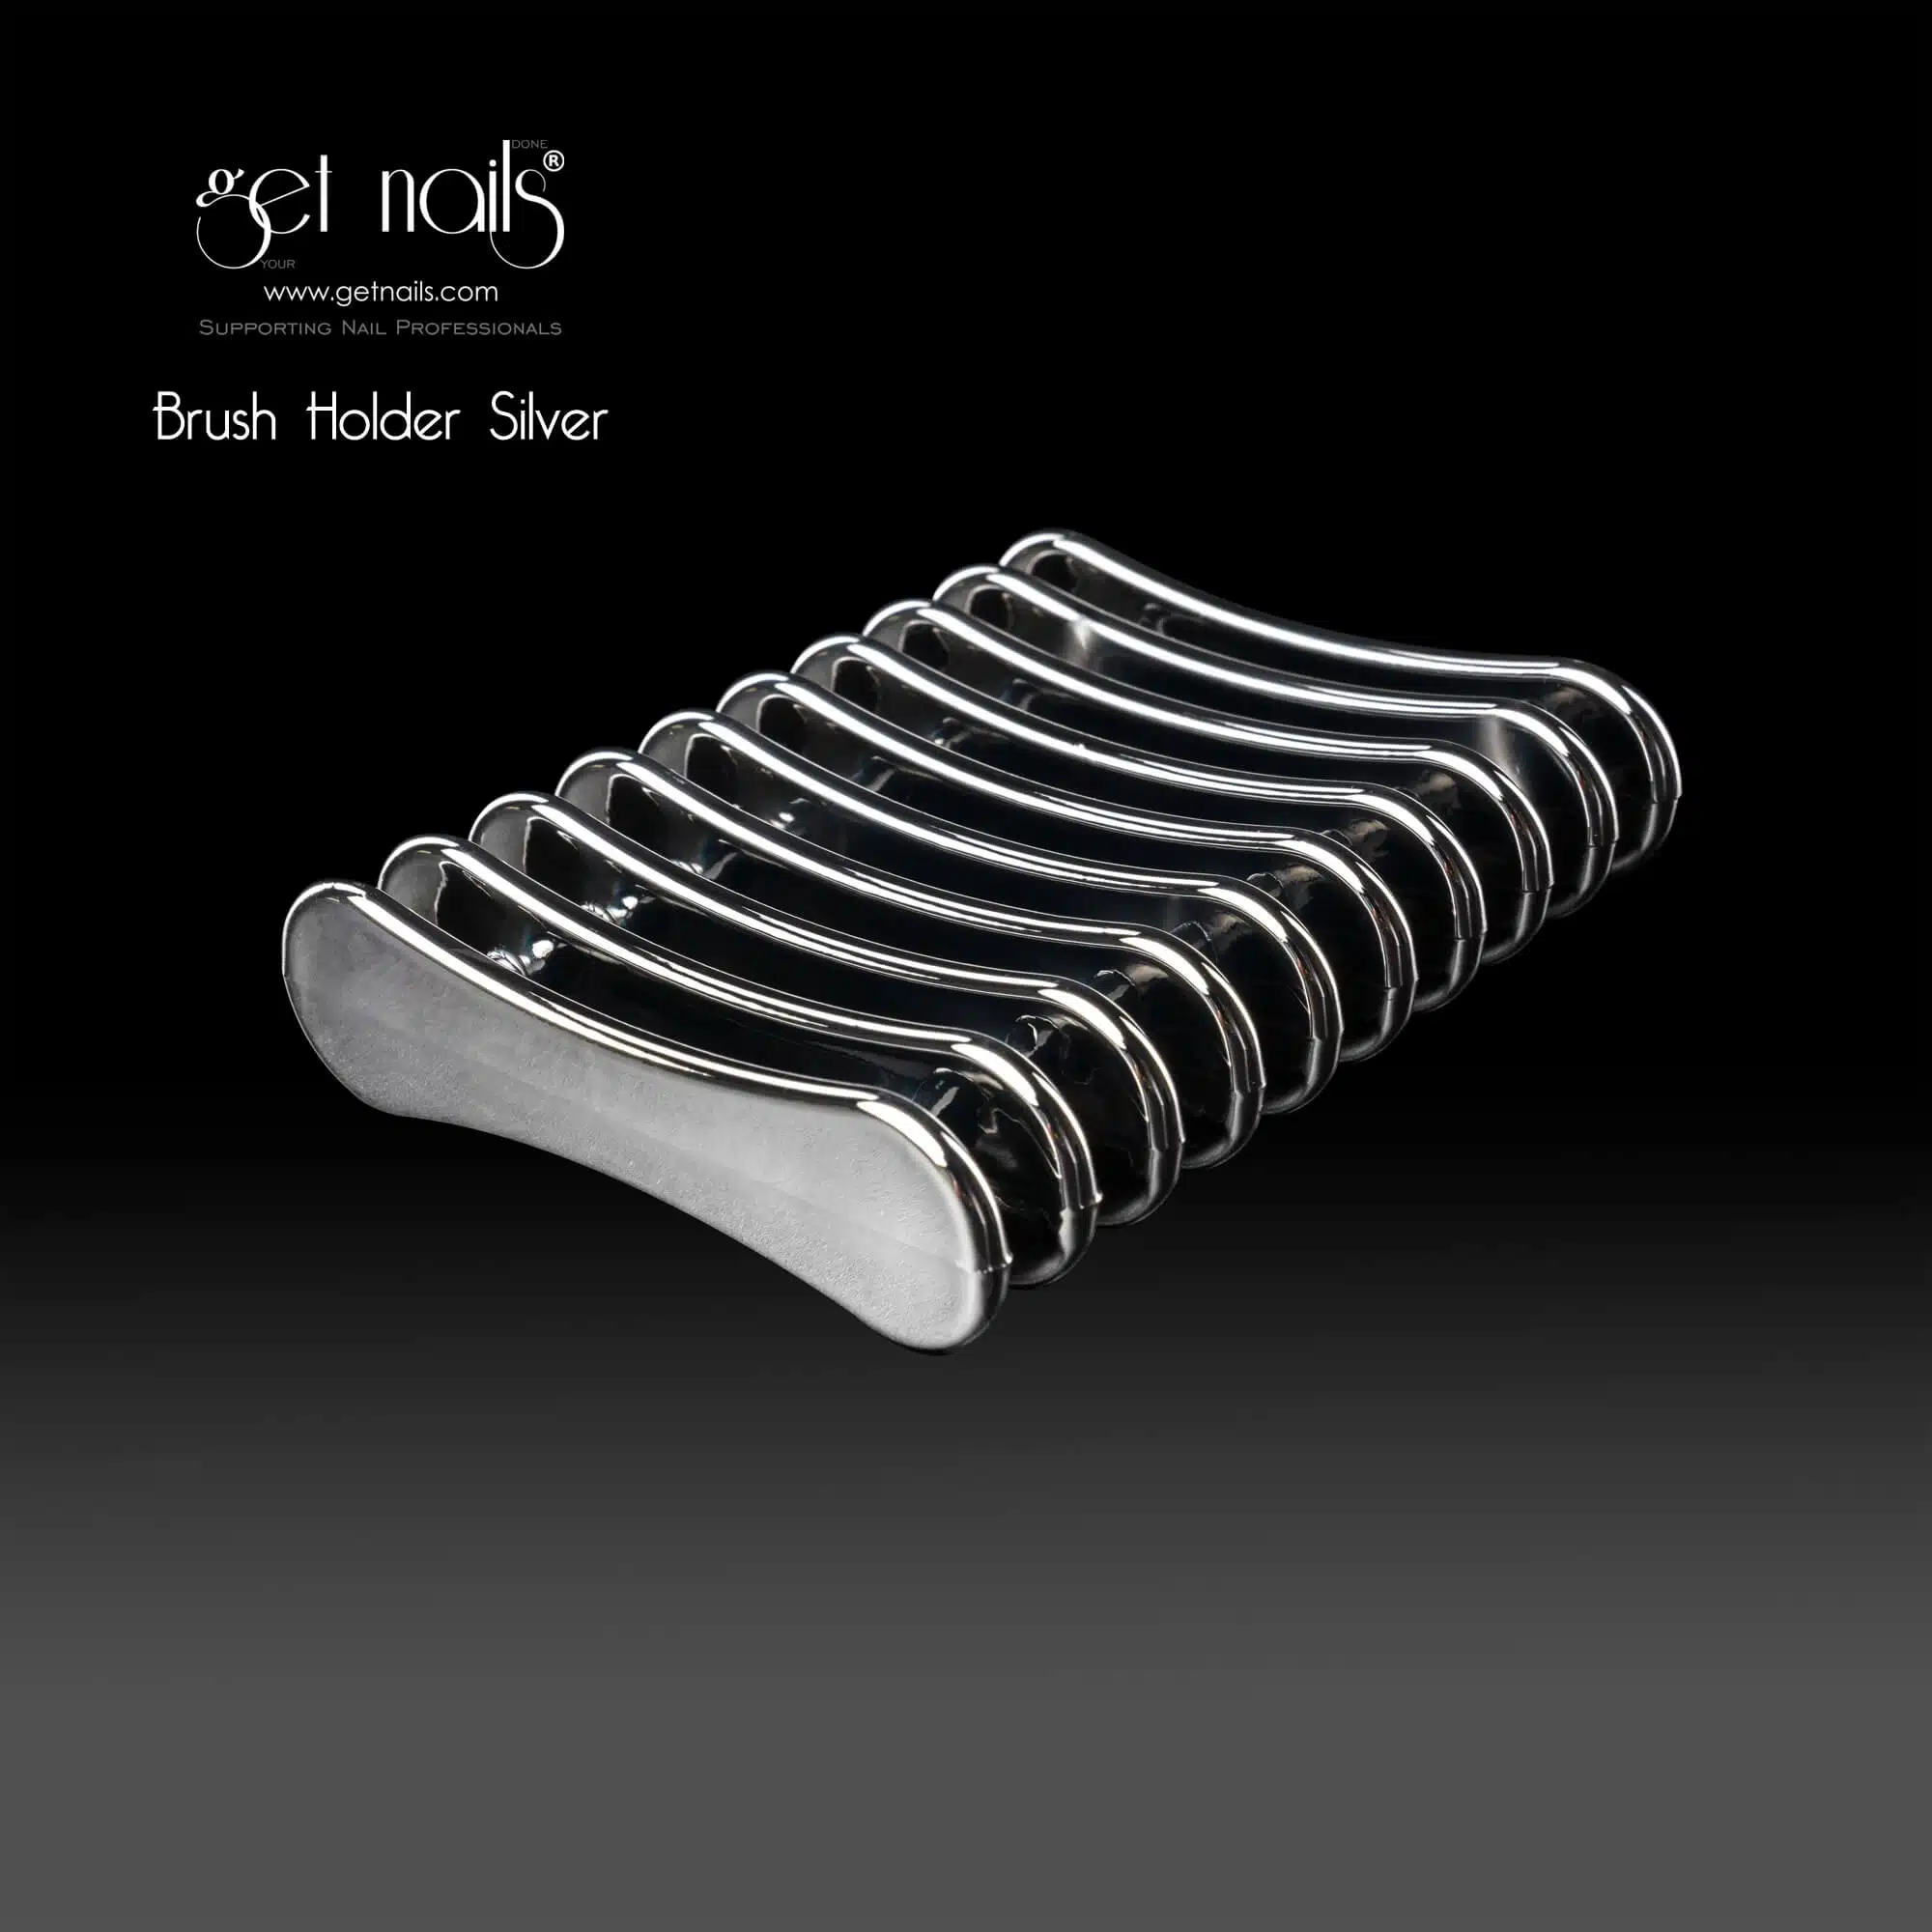 Get Nails Austria - Brush Holder Silver